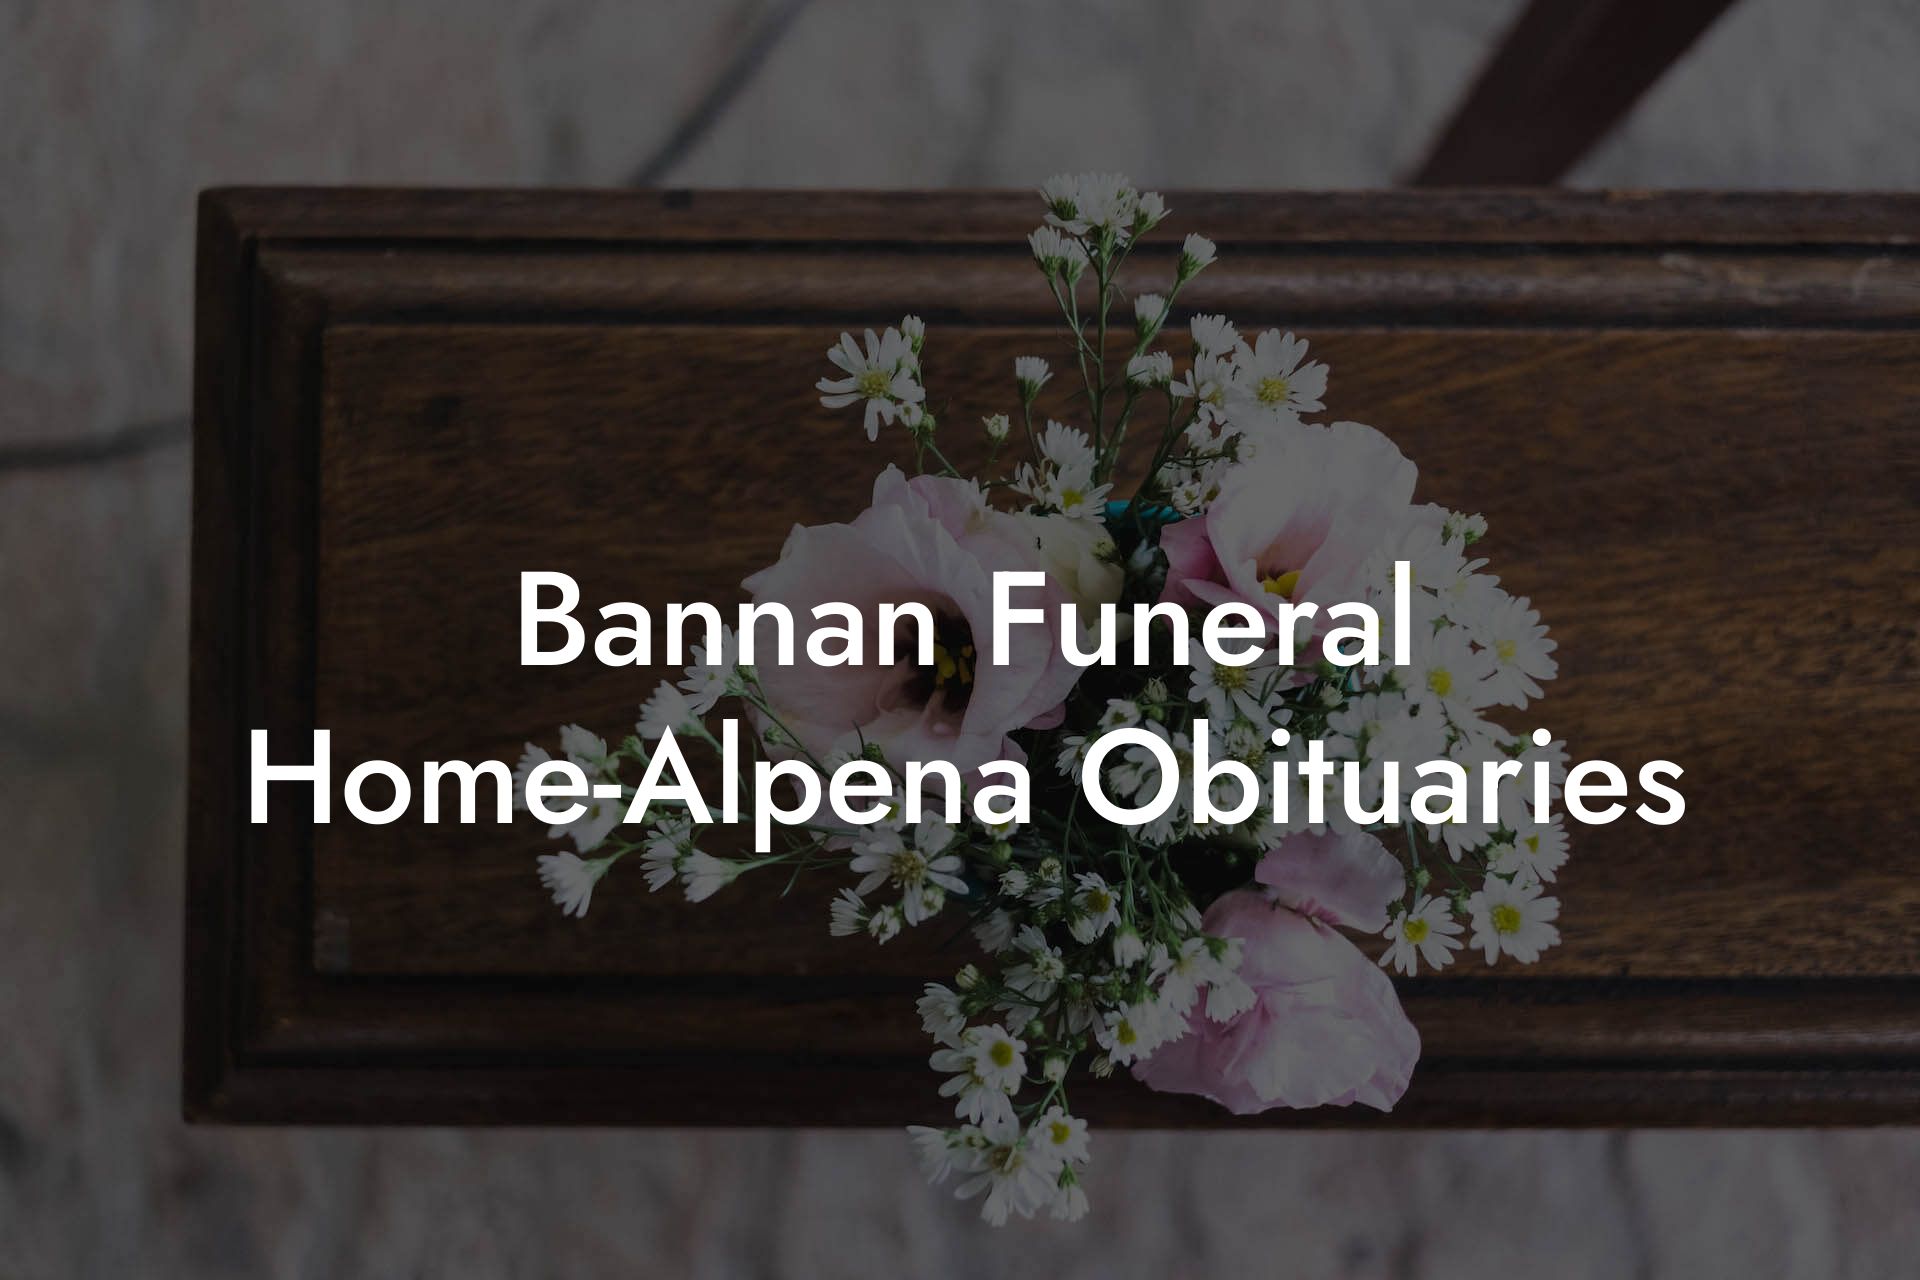 Bannan Funeral Home-Alpena Obituaries